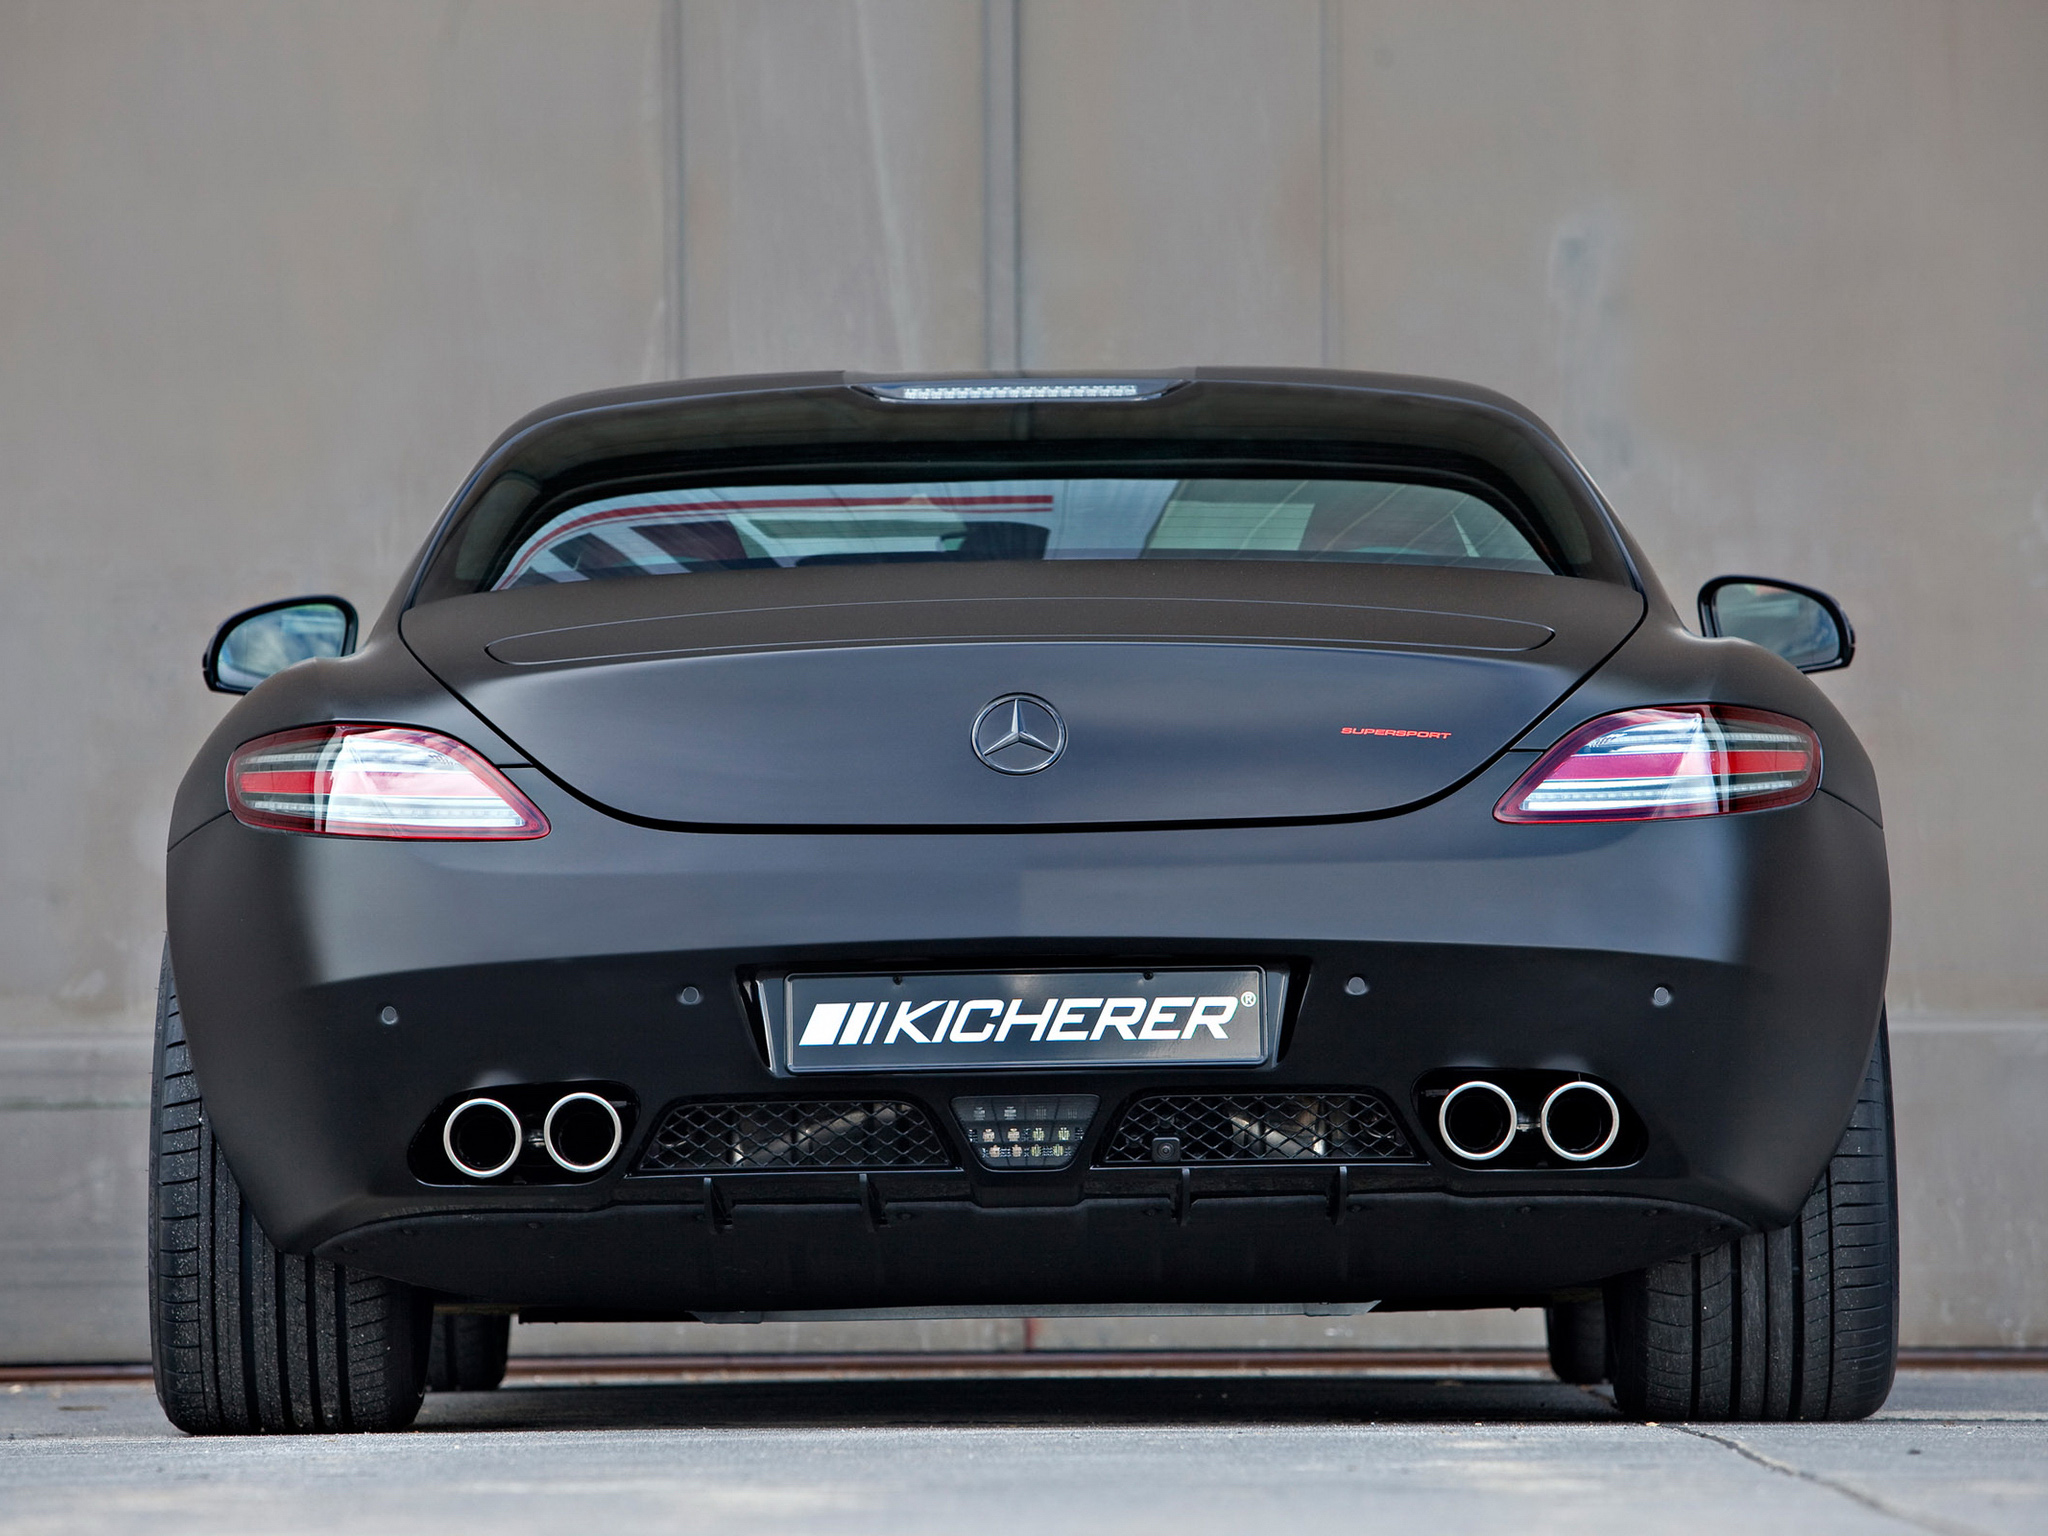 Download High quality Kicherer black back Mercedes wallpaper / 2048x1536